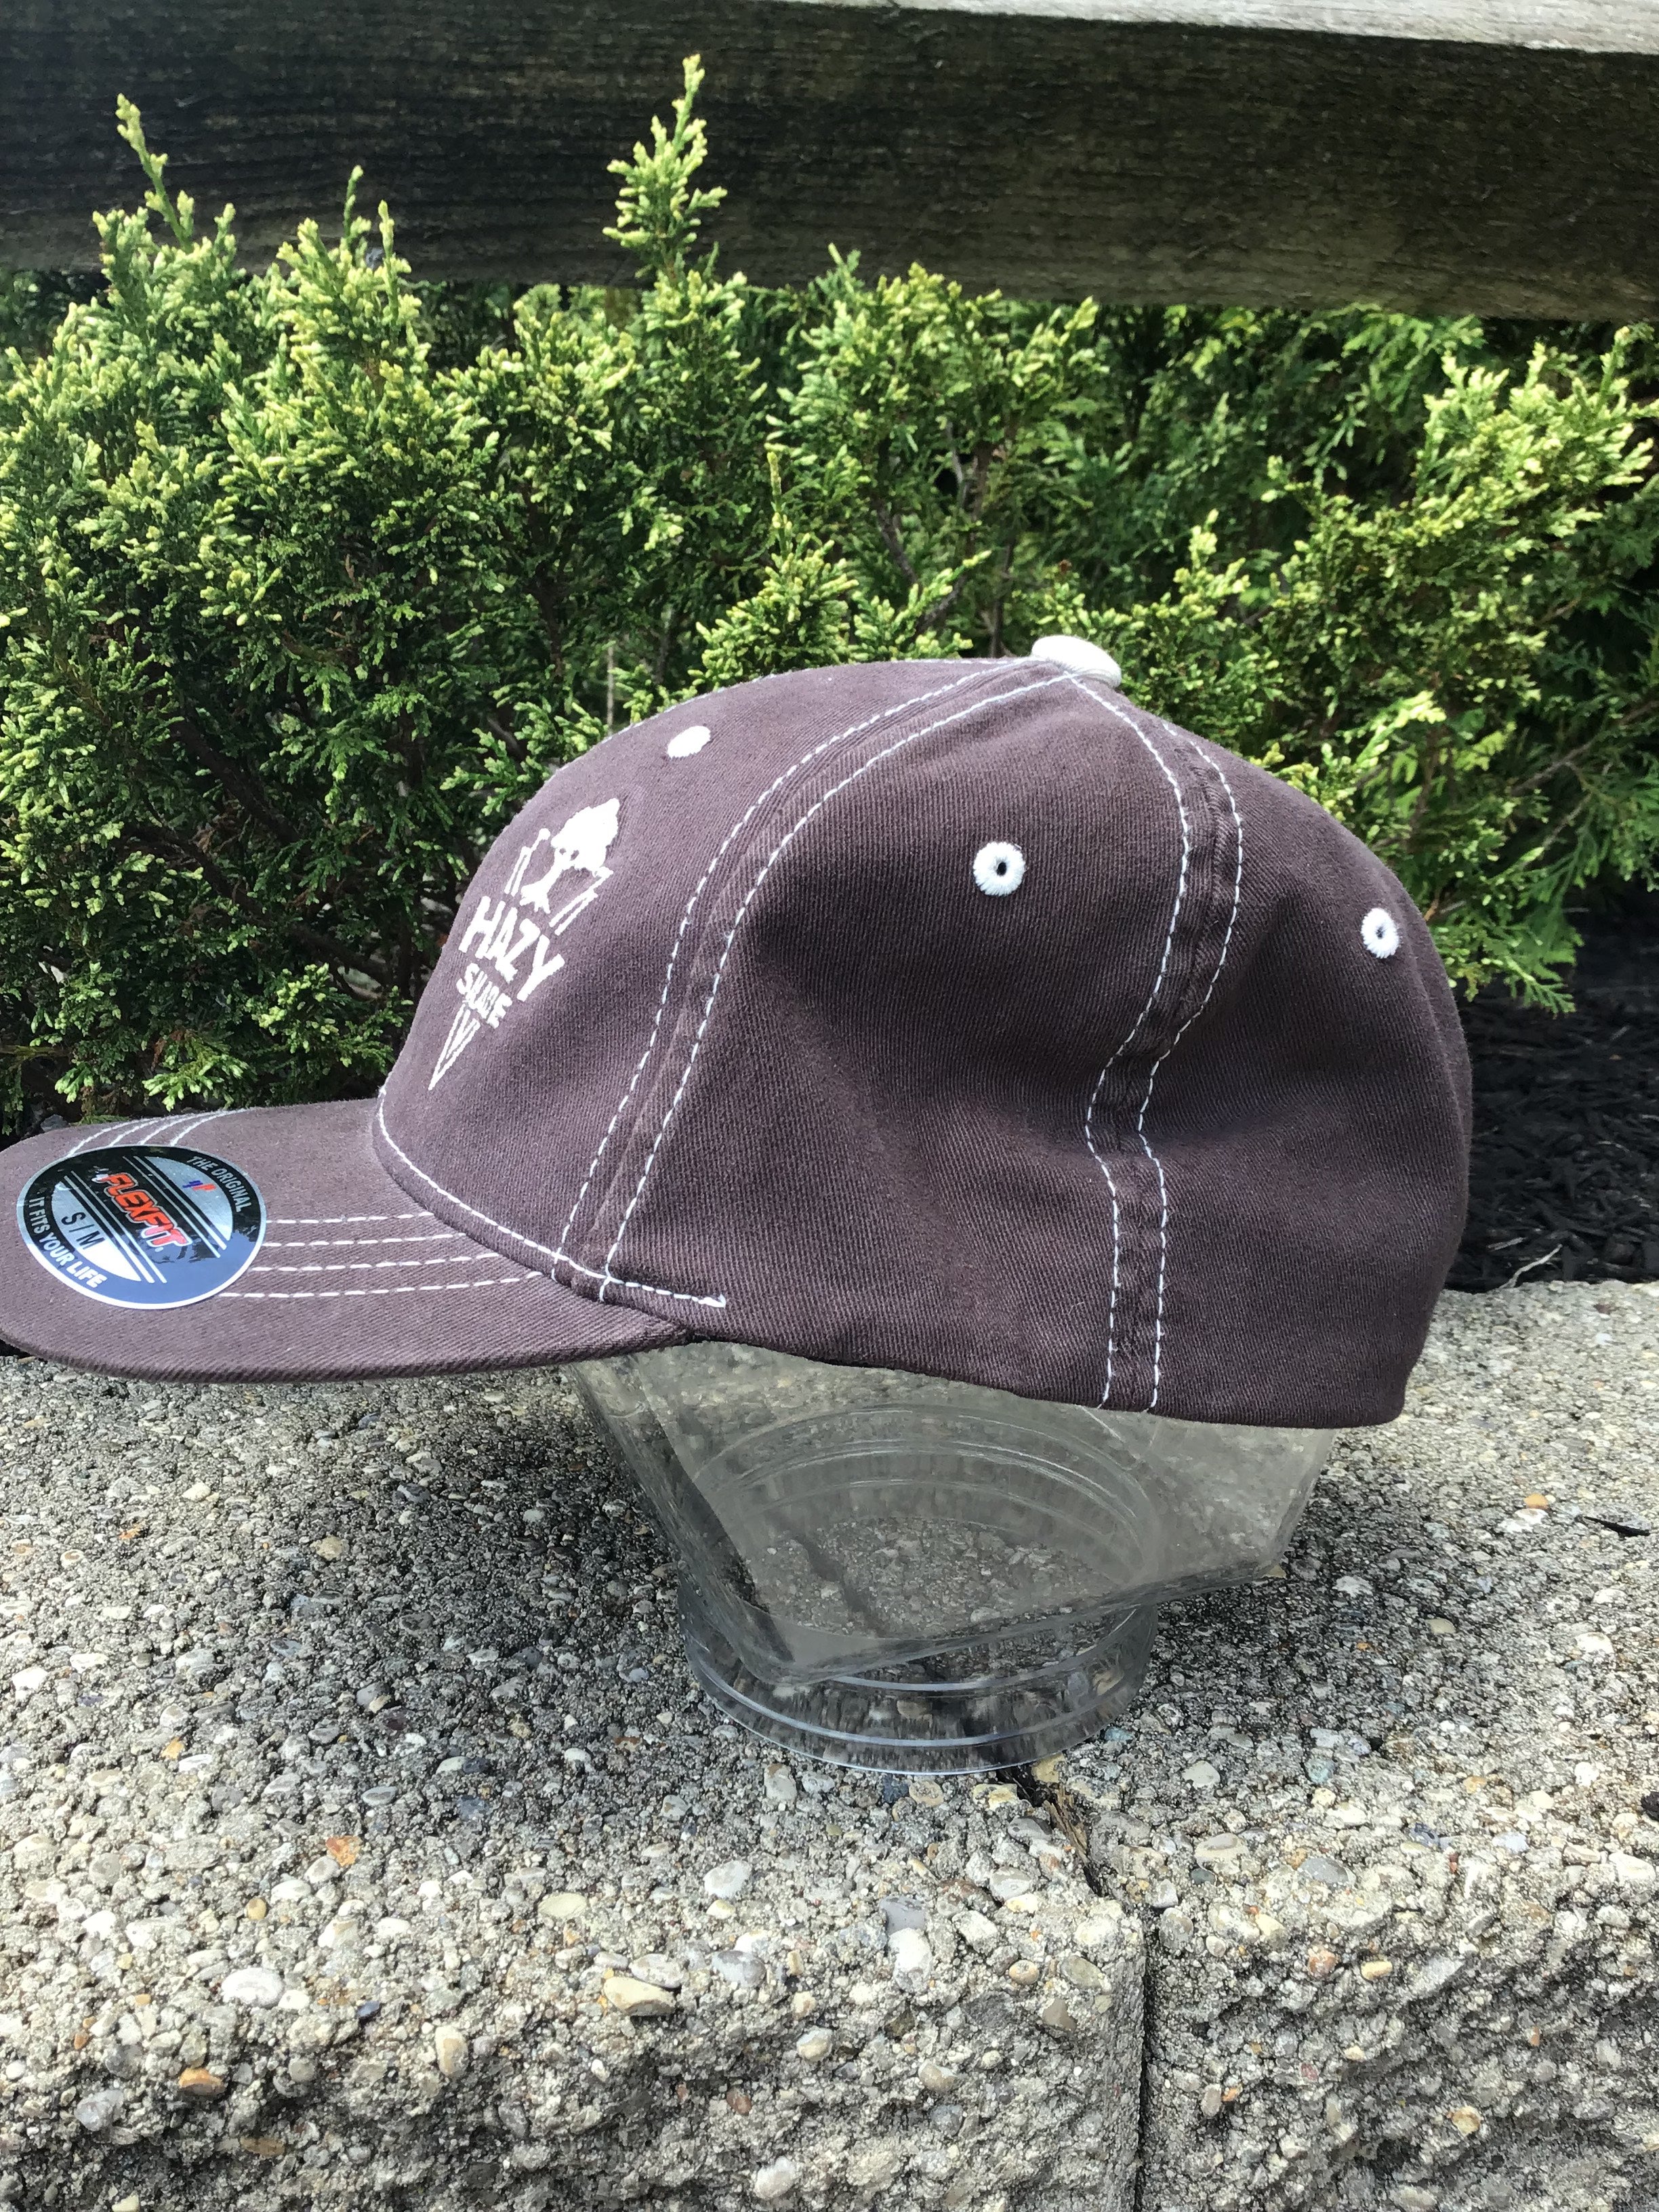 Hazy Shade Brown/Stone Contrast Stitch Triangle Flexfit Hat S/M